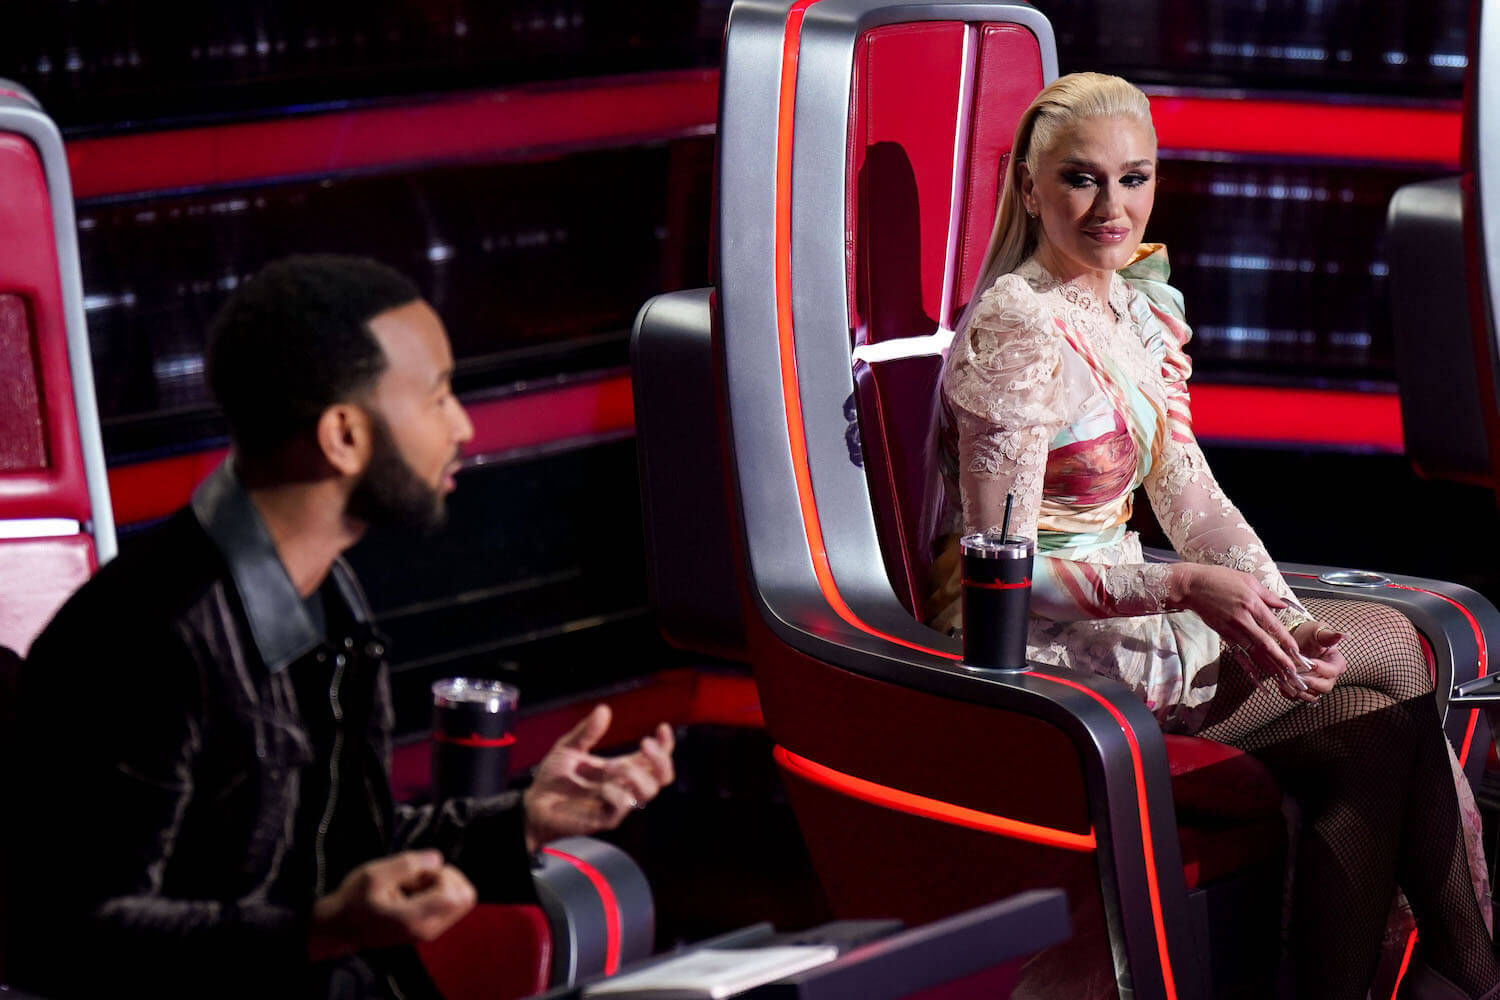 'The Voice' Season 24 coach John Legend sitting next to Gwen Stefani on the show